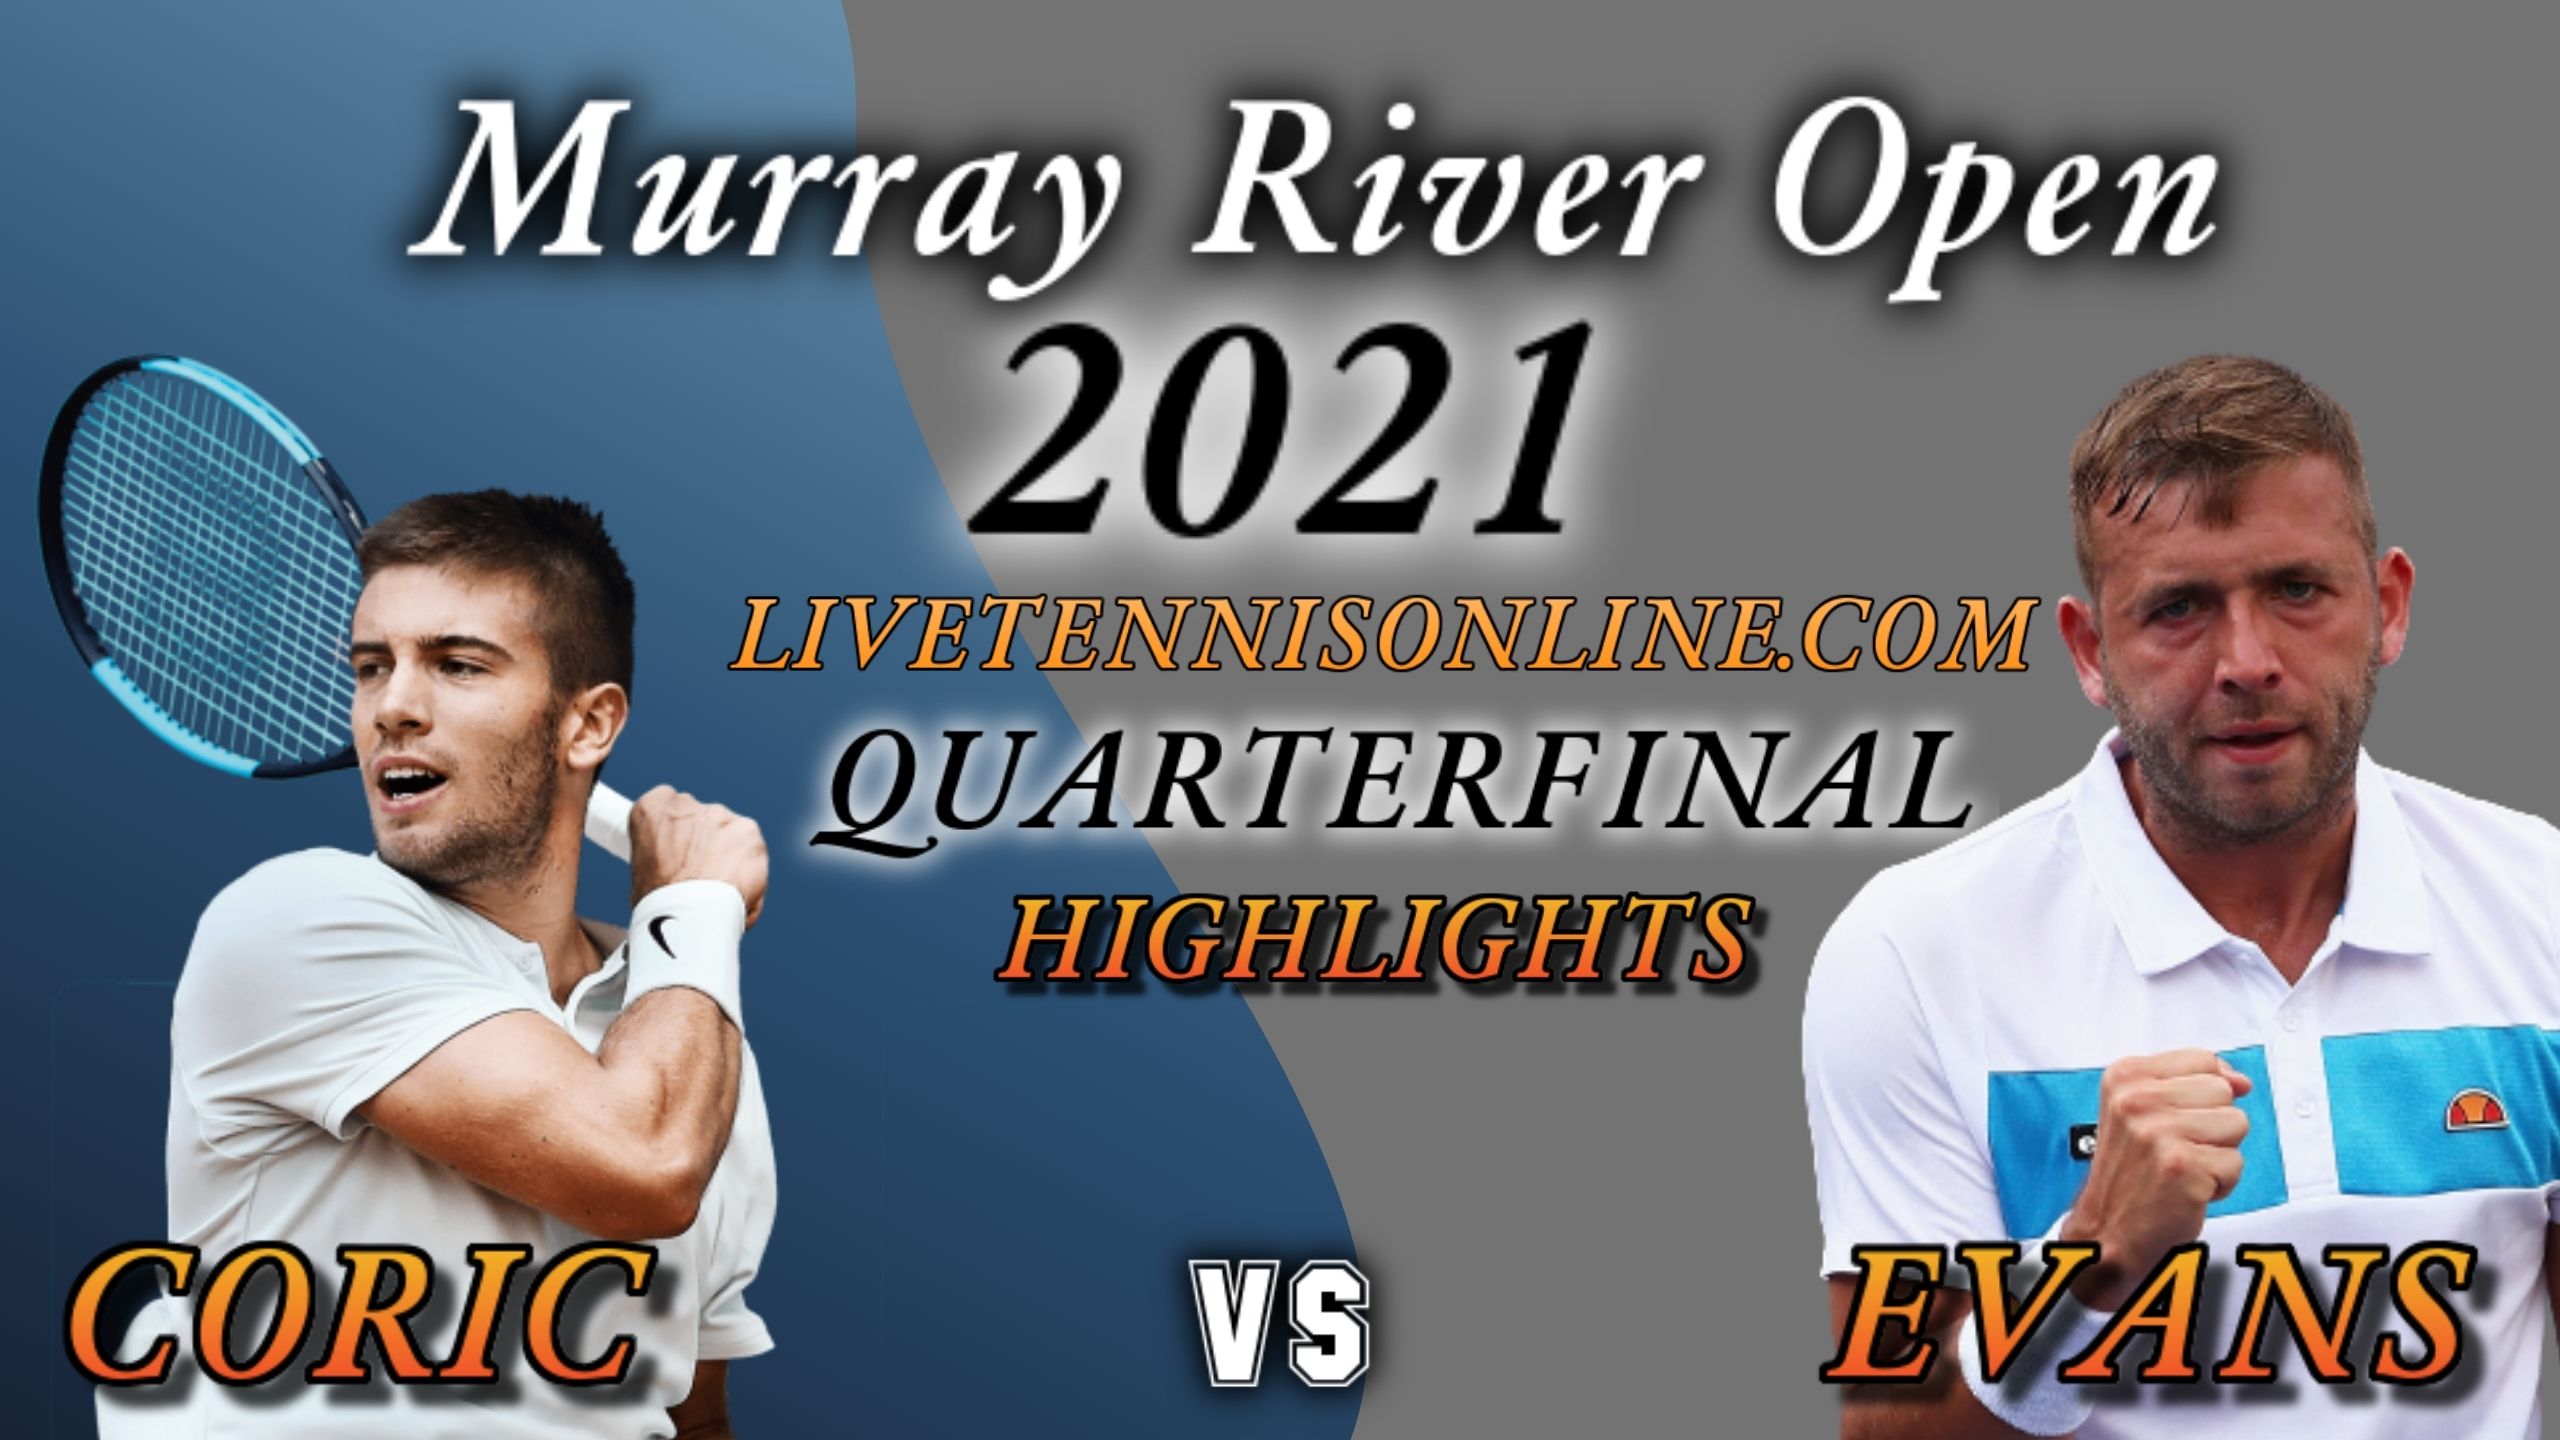 Coric Vs Evans Quarterfinal Highlights 2021